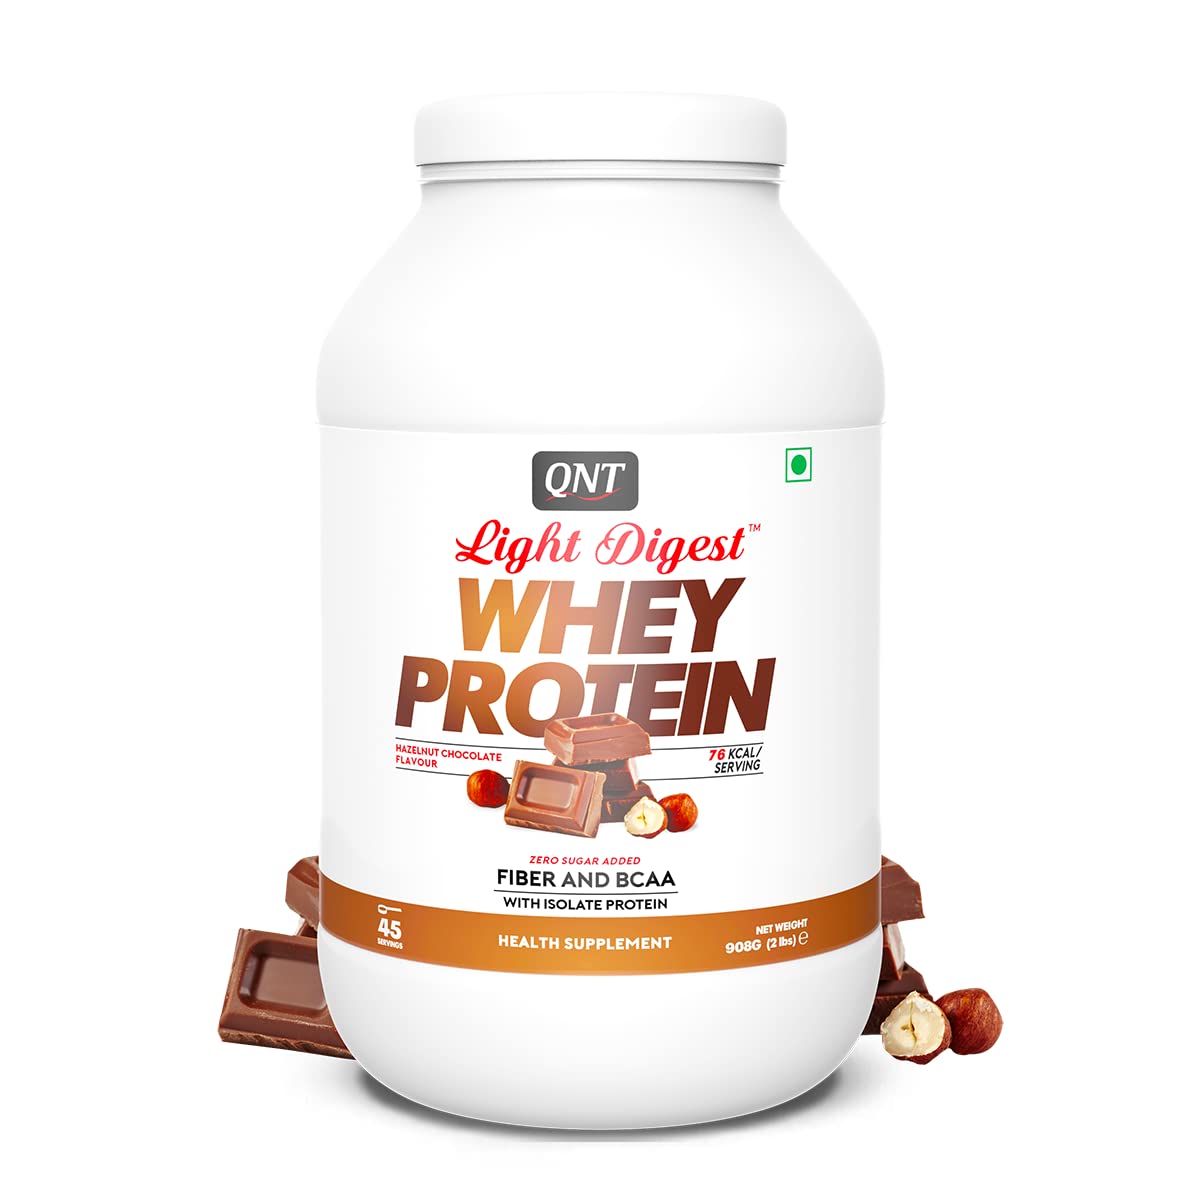 QNT Light Digest Whey Protein Hazelnut Chocolate Flavour Powder, 908 gm, Pack of 1 